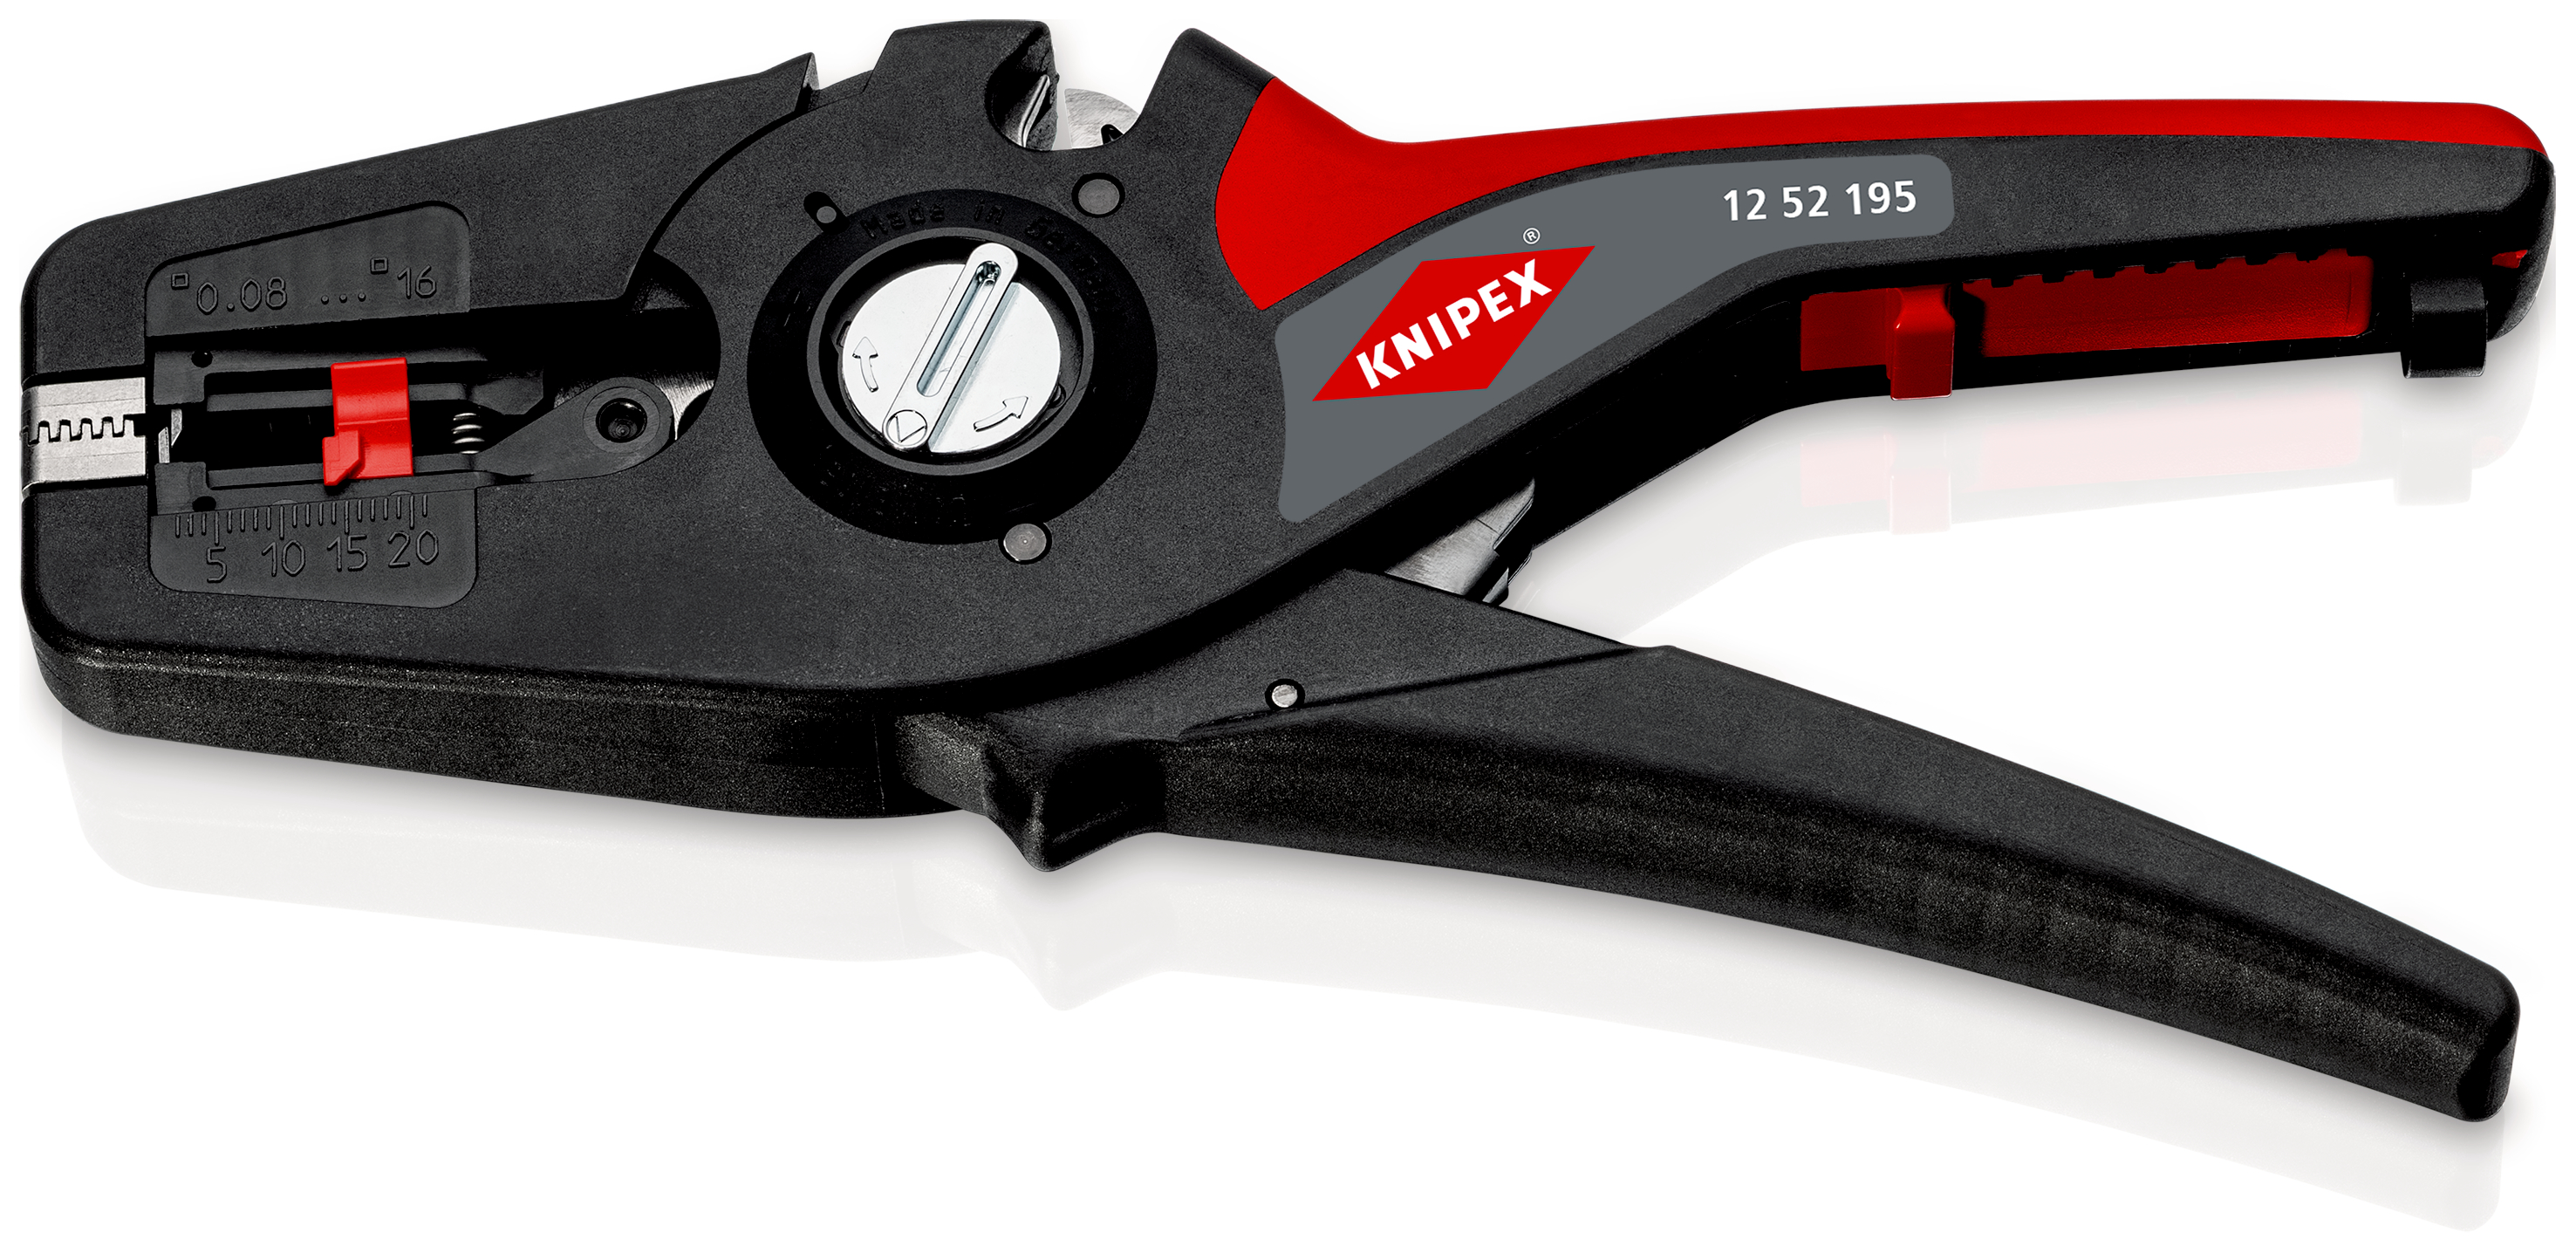 KNIPEX 12 52 195 Self-Adjusting insulation stripper PreciStrip16, 195 mm